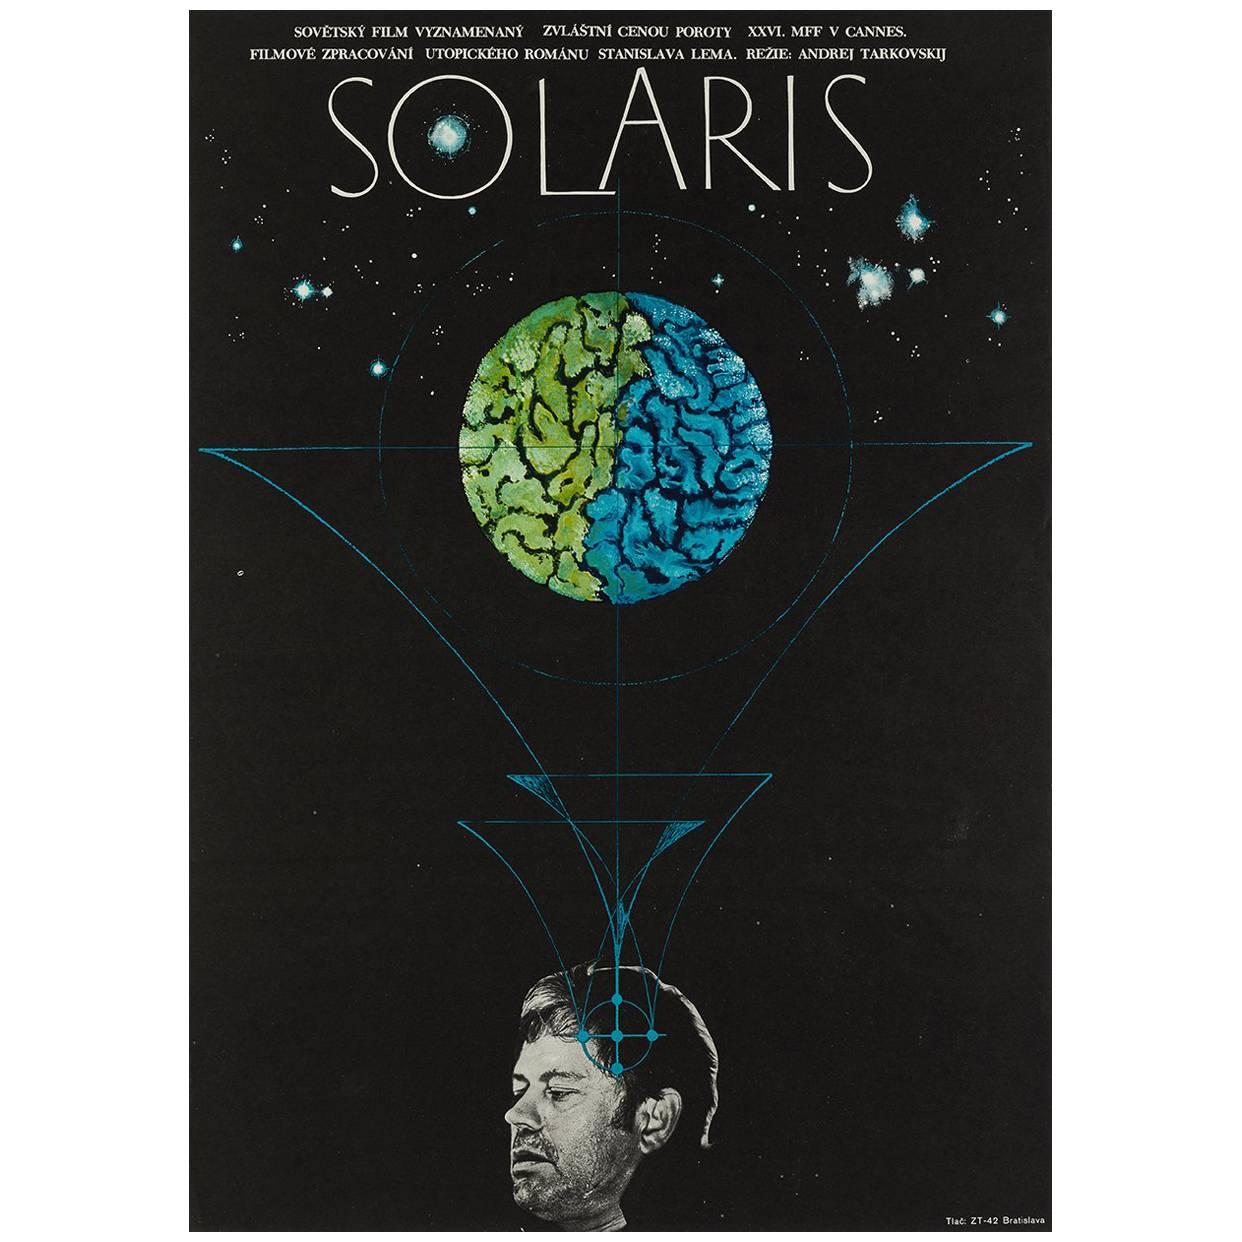 Solaris Original Czech Film Poster, 1975